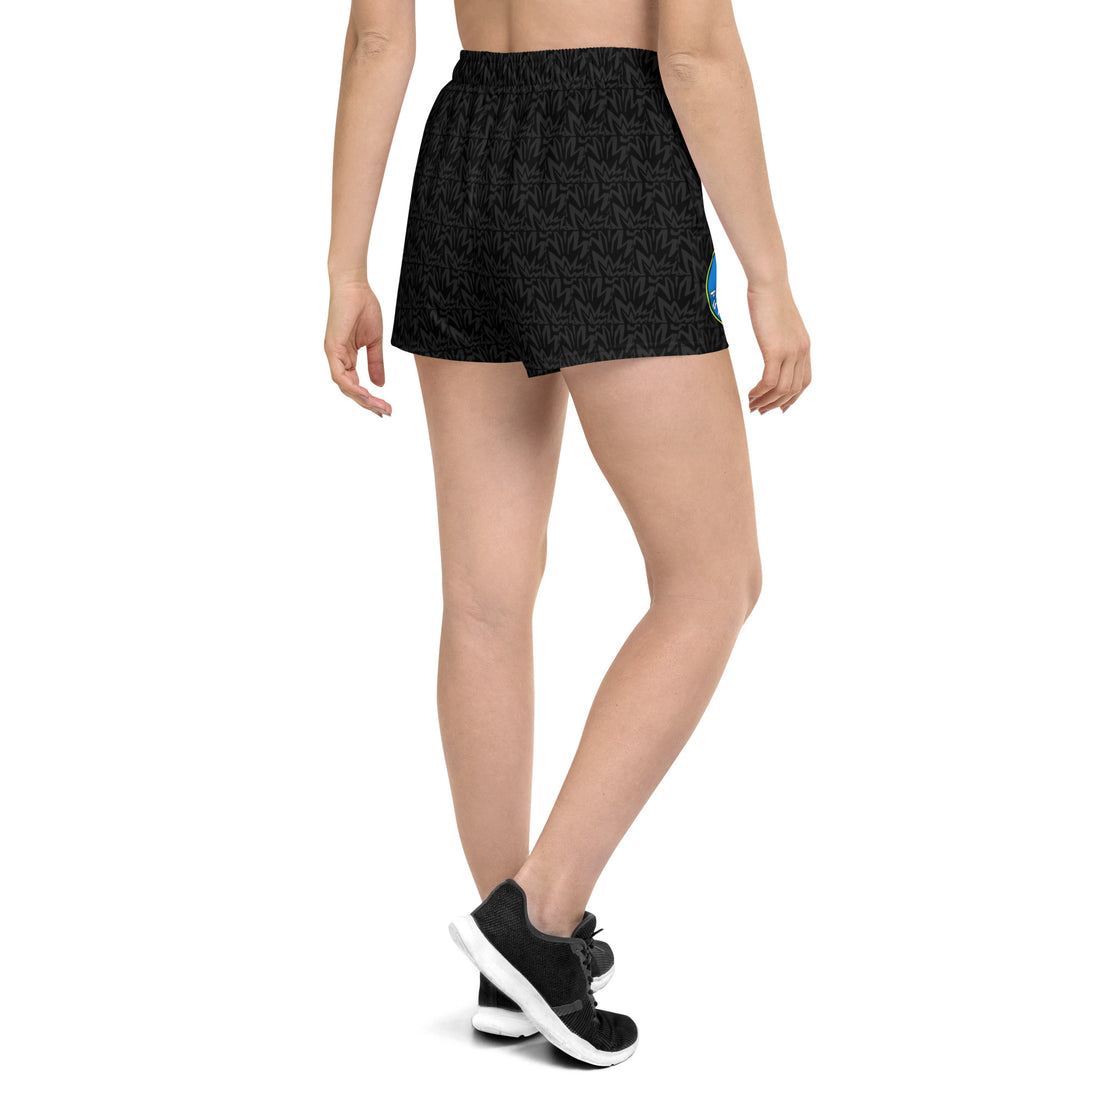 OKC Punishers™ SKYblue™ 2023 Authentic Women's Shorts, Black - Charcoal